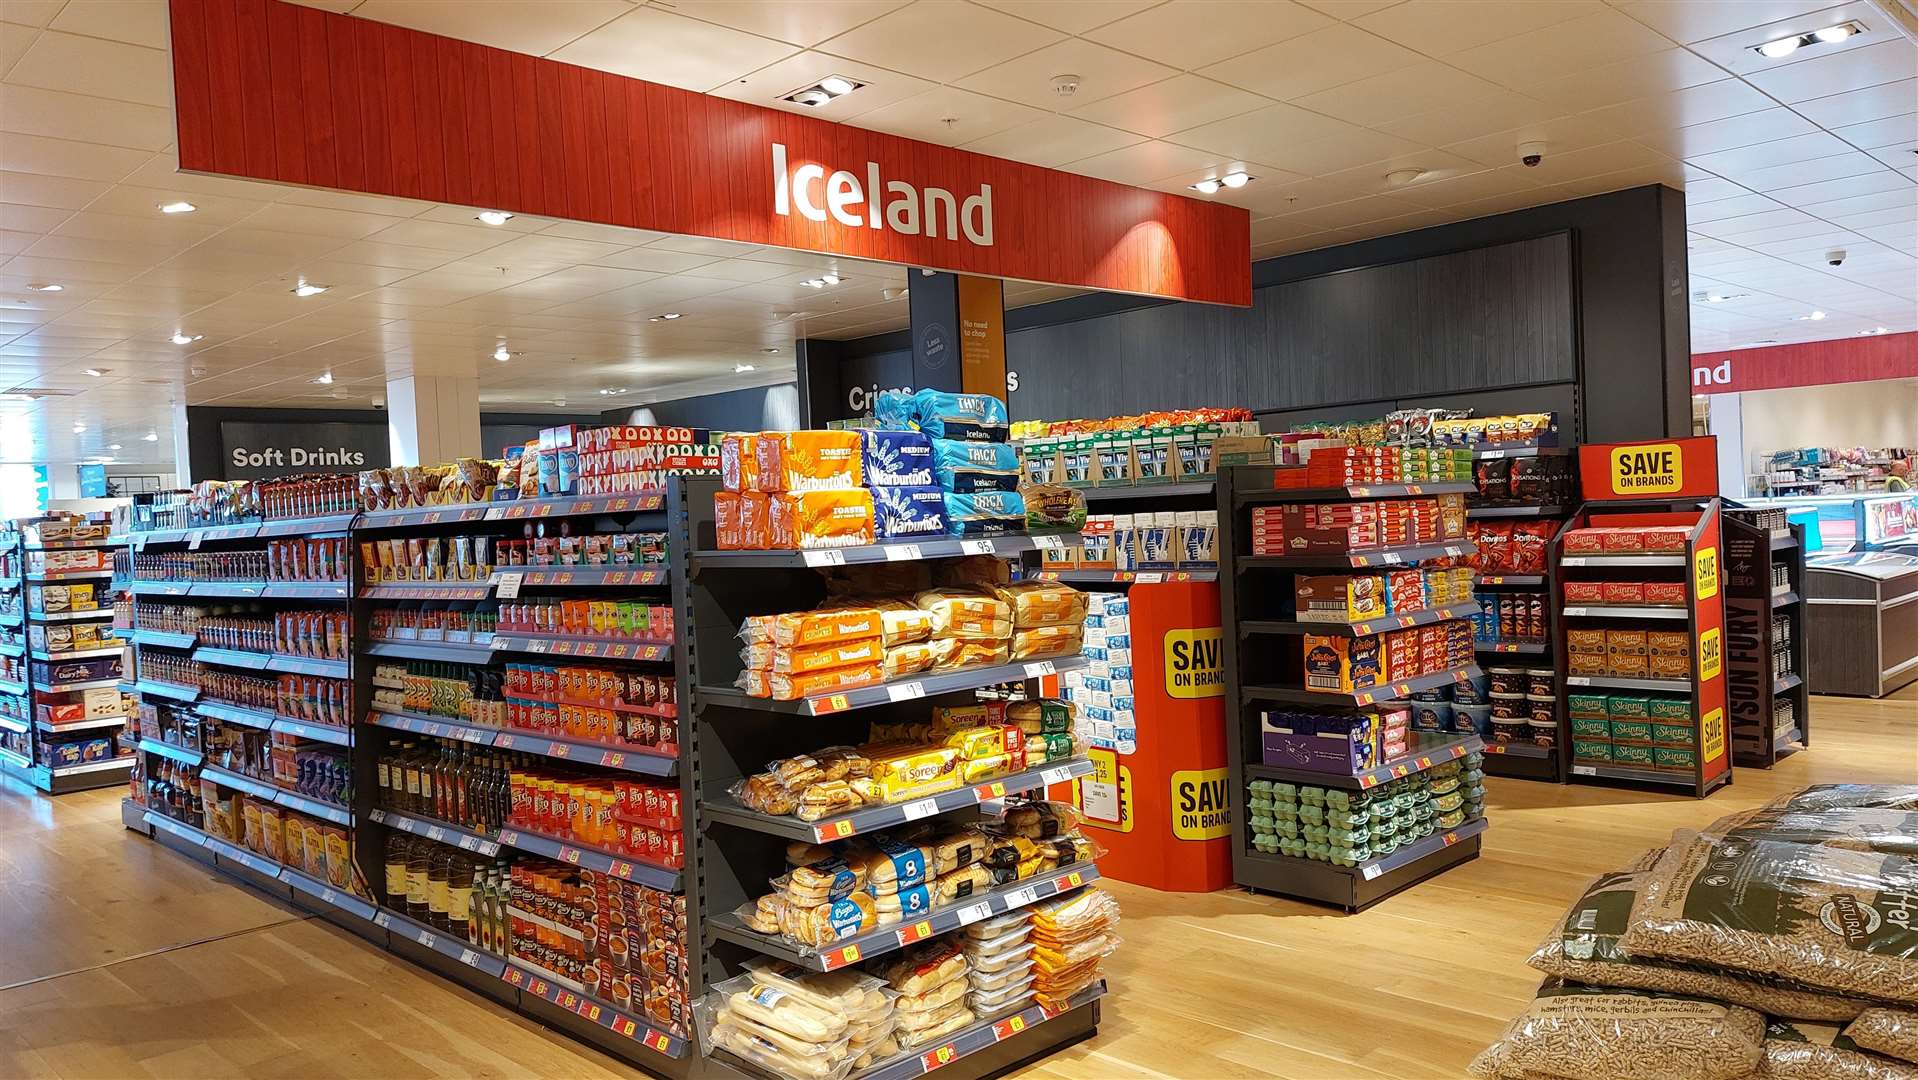 The mini Iceland supermarket